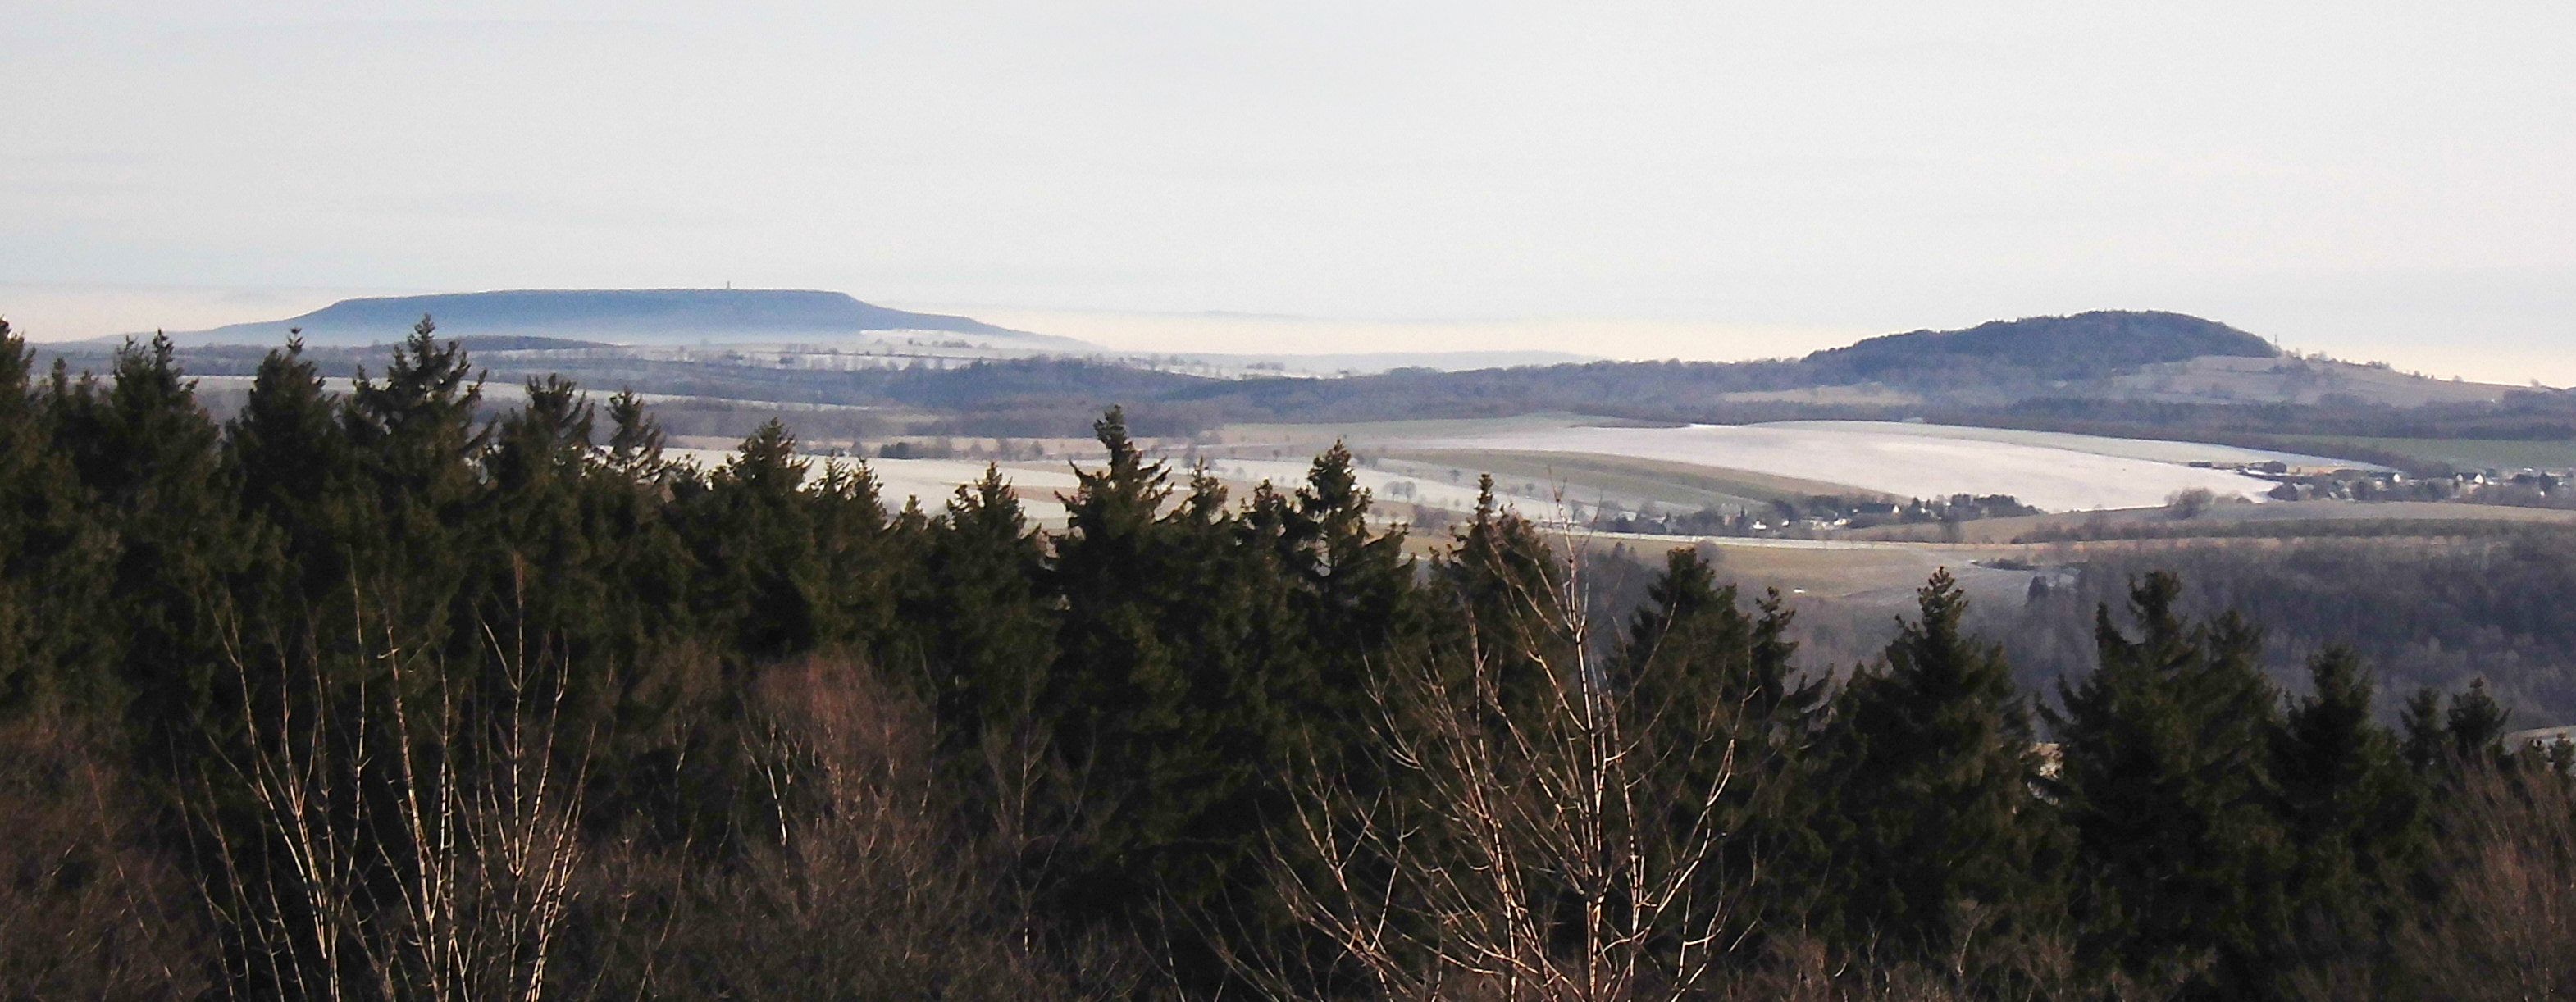 Panoramaweg - Blick zum Schneeberg und Sattelberg